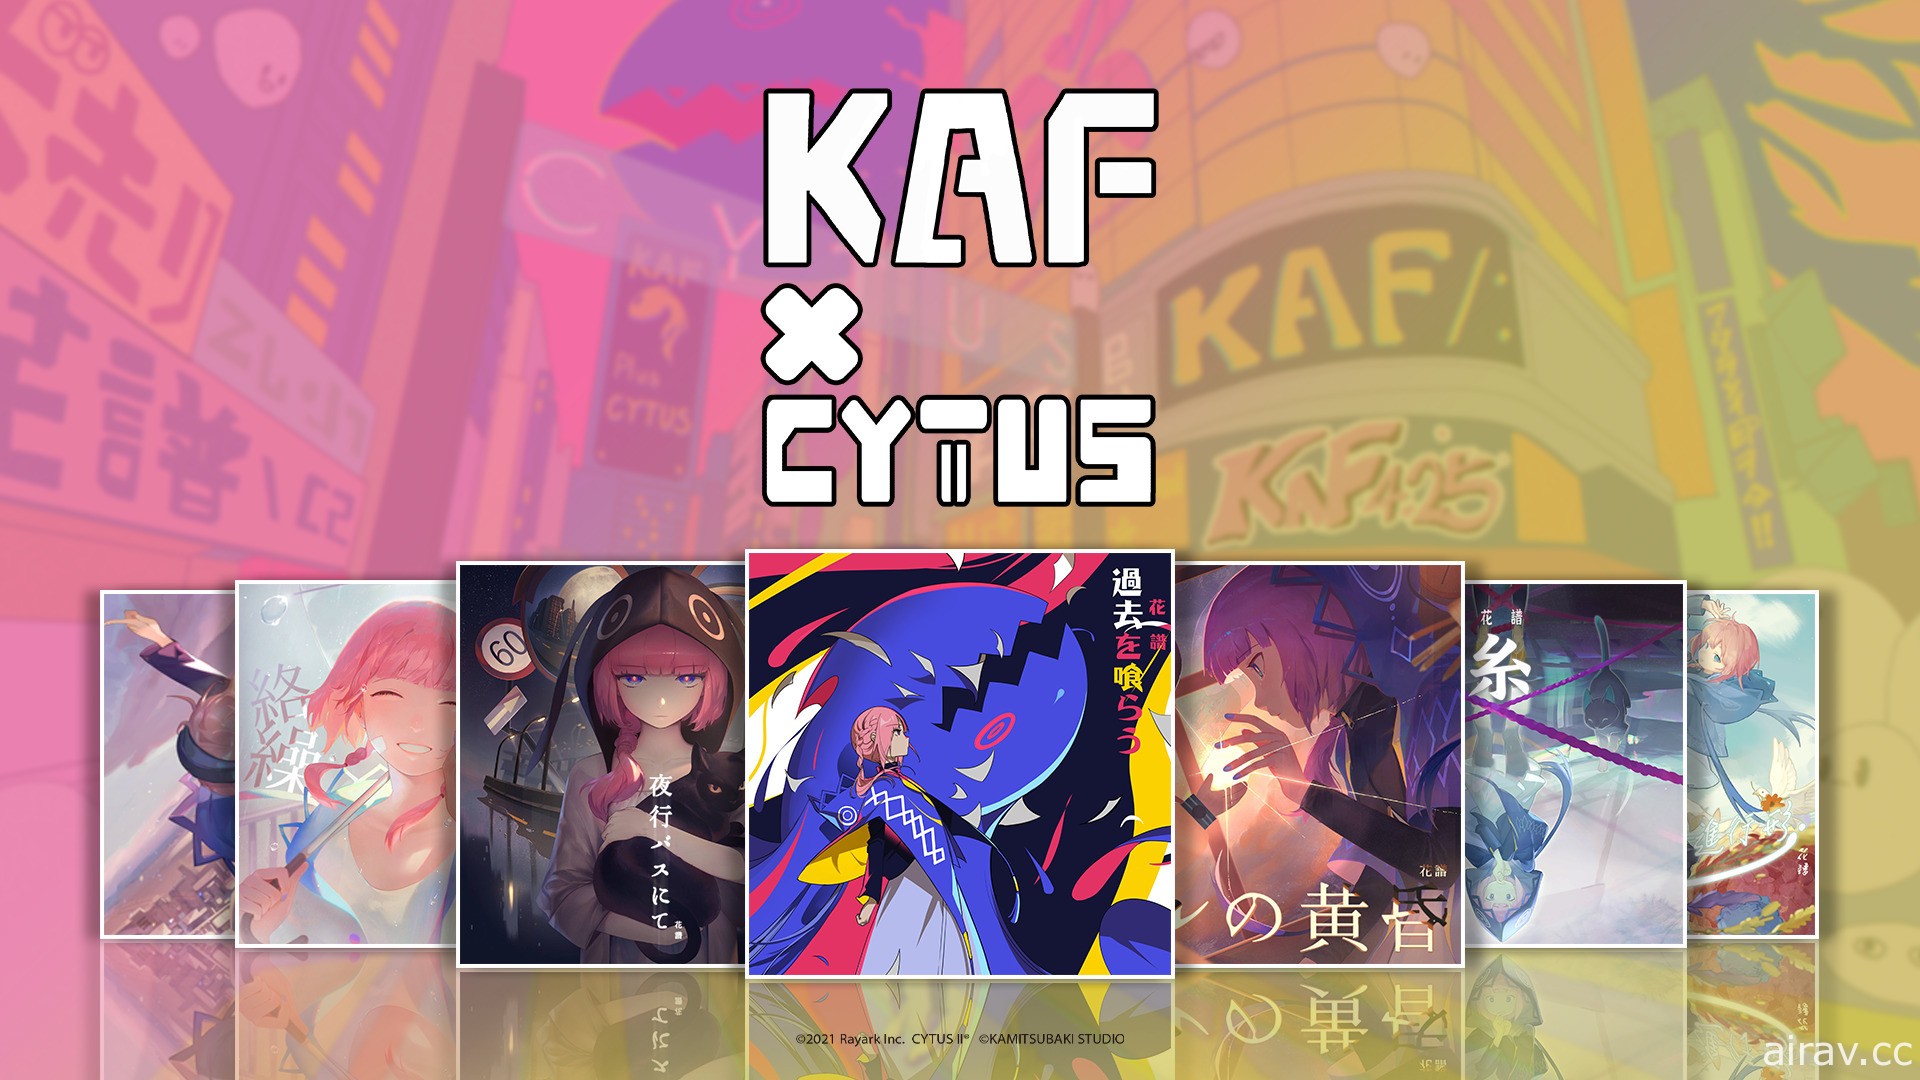 《Cytus II》4.2.5 版限時免費下載 推出虛擬 Youtuber 花譜合作角色「Kaf」